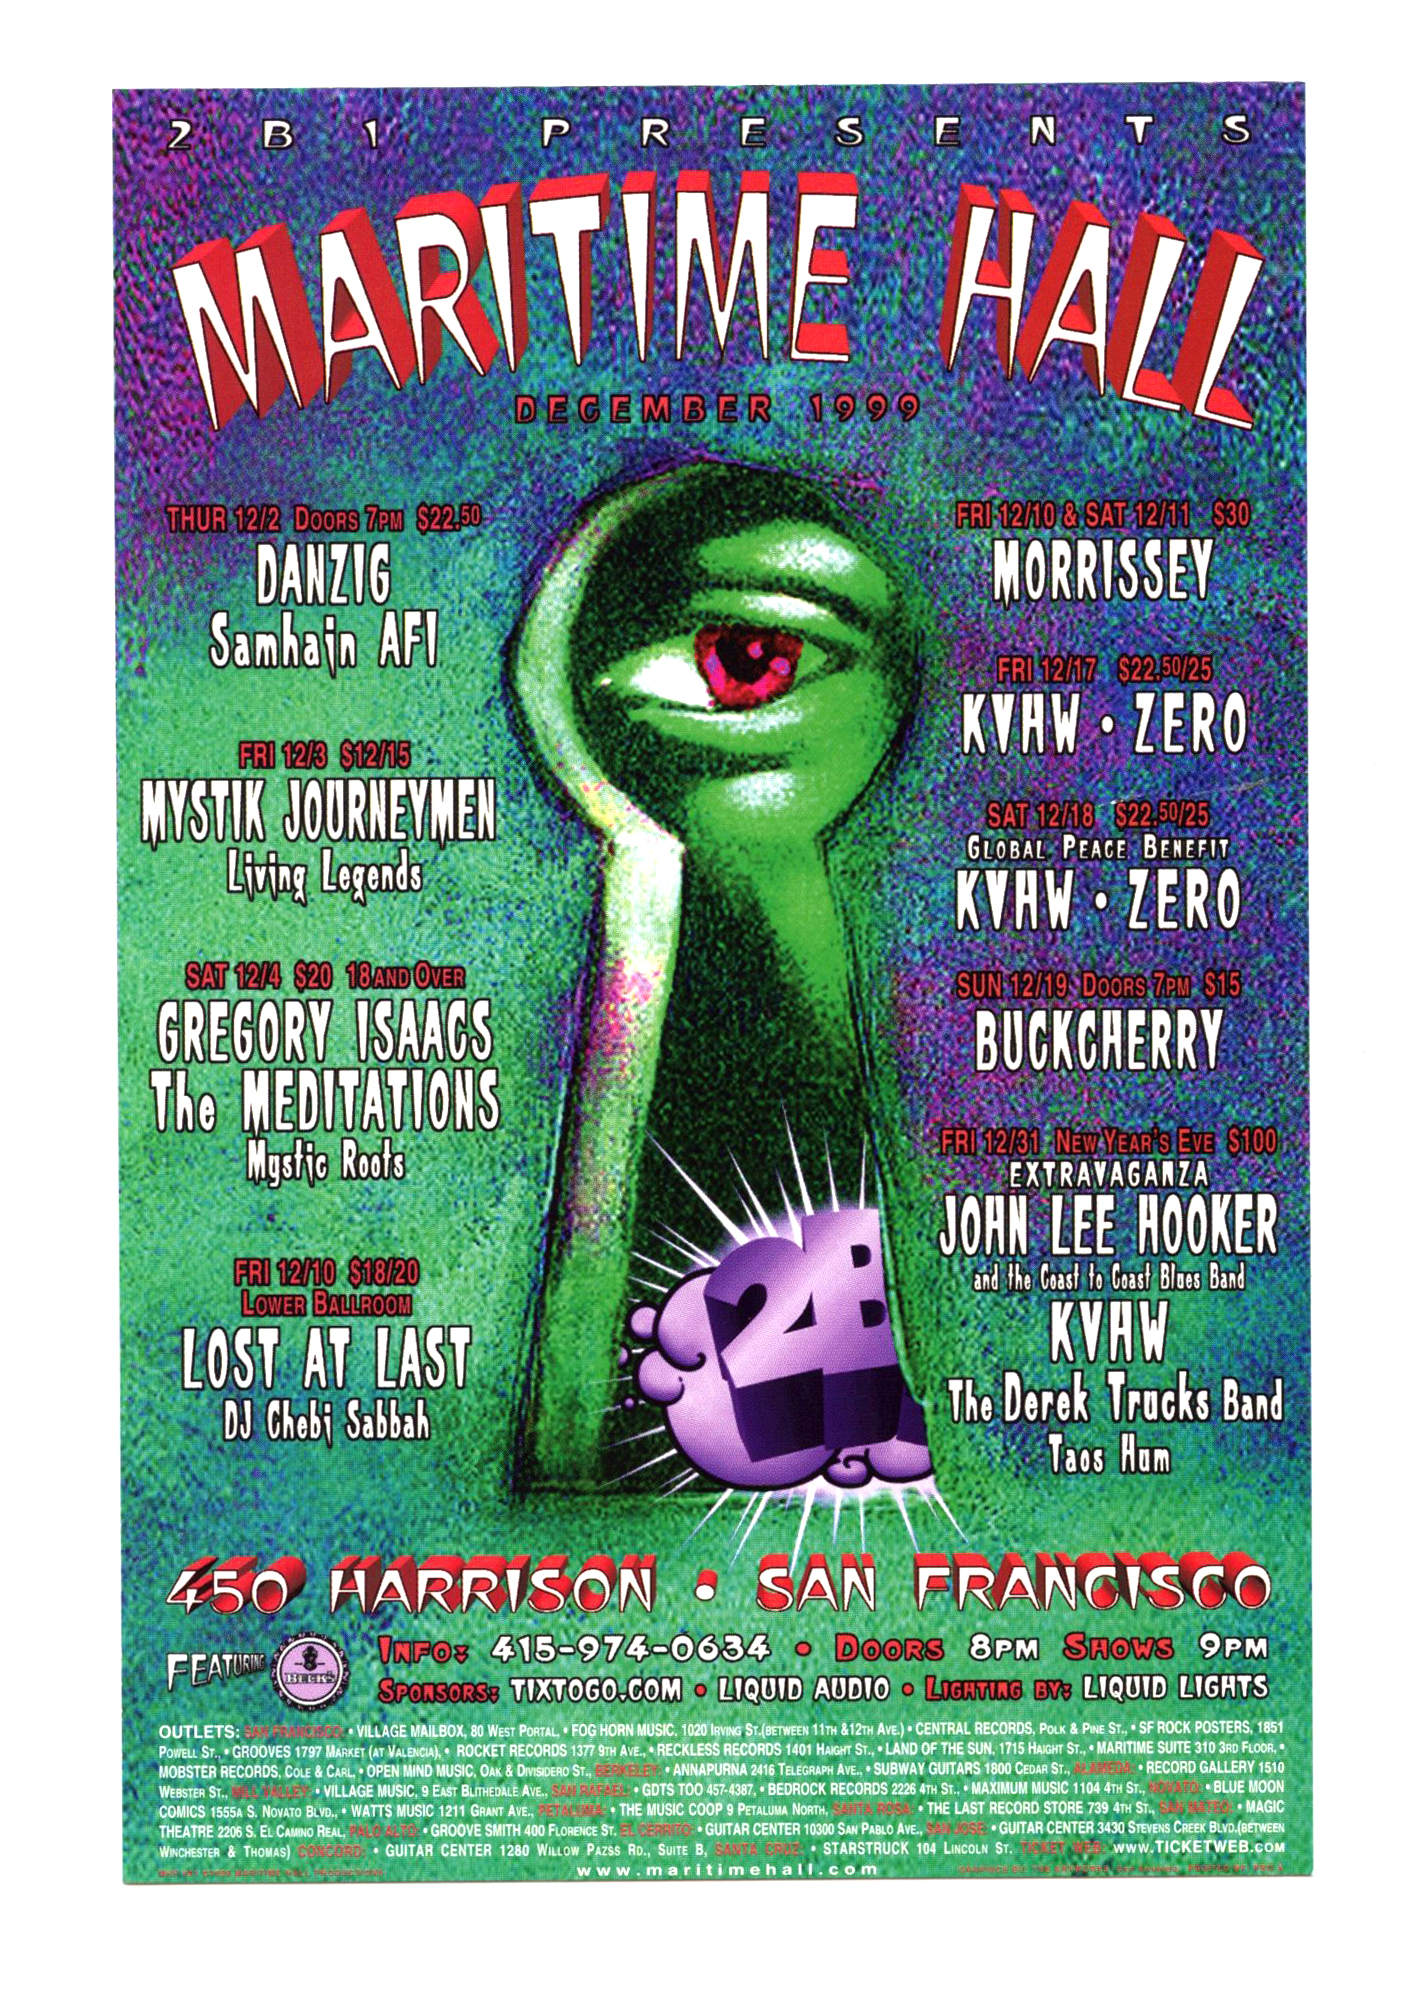 Maritime Hall 1999 Dec Handbill Danzig John Lee Hooker KVHW